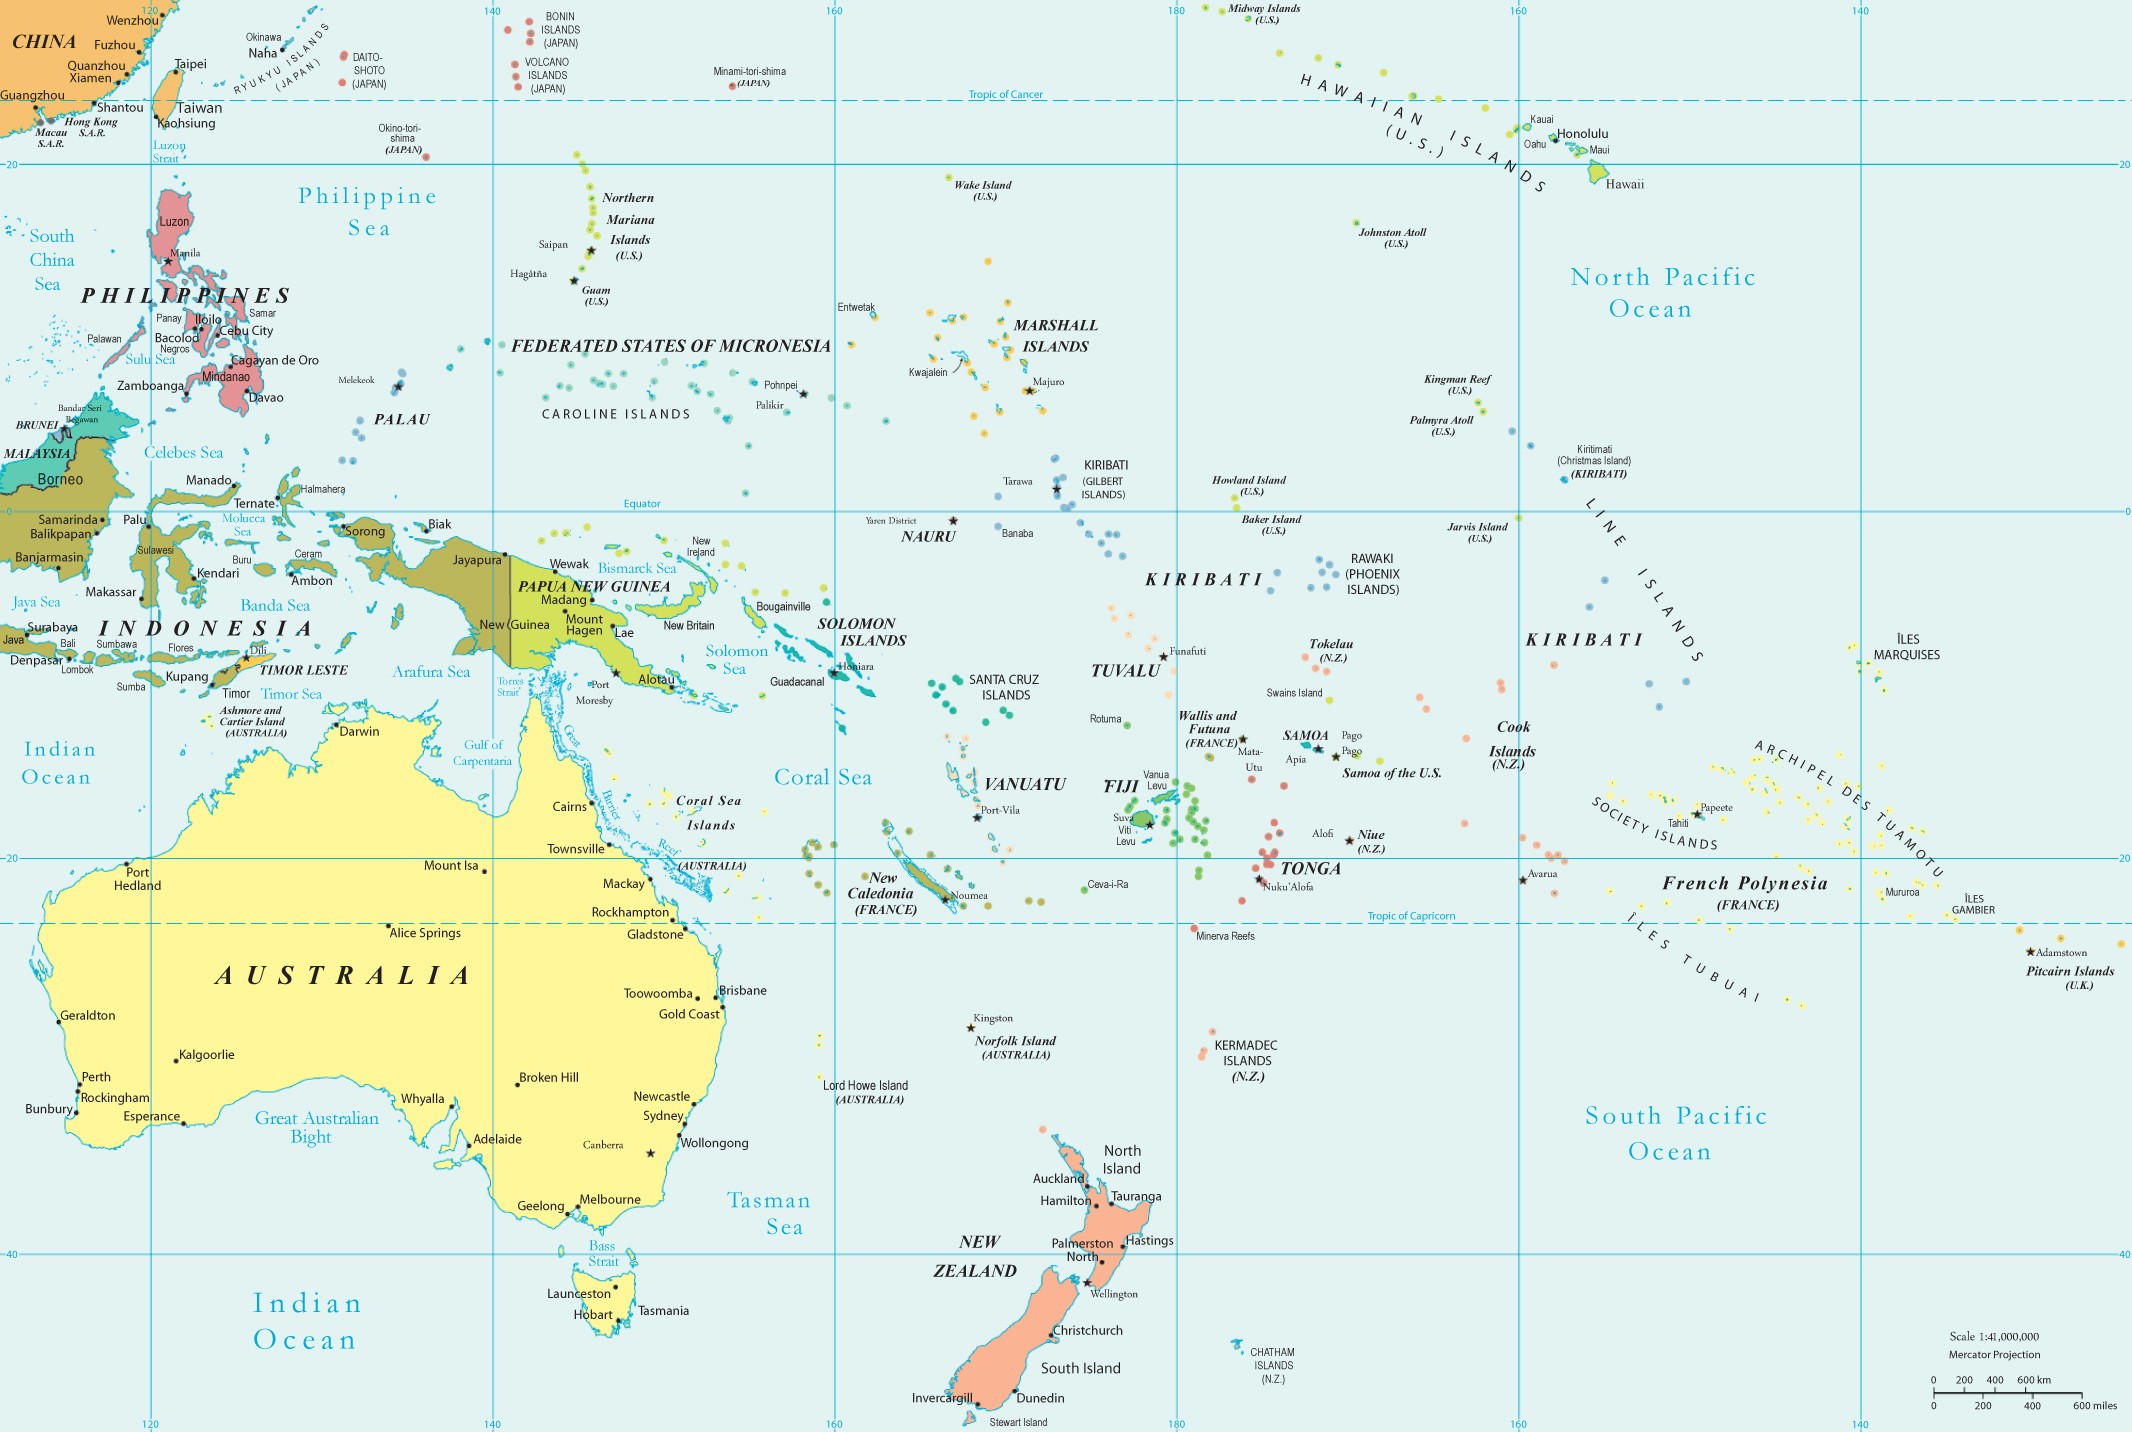 HD Map of Oceania